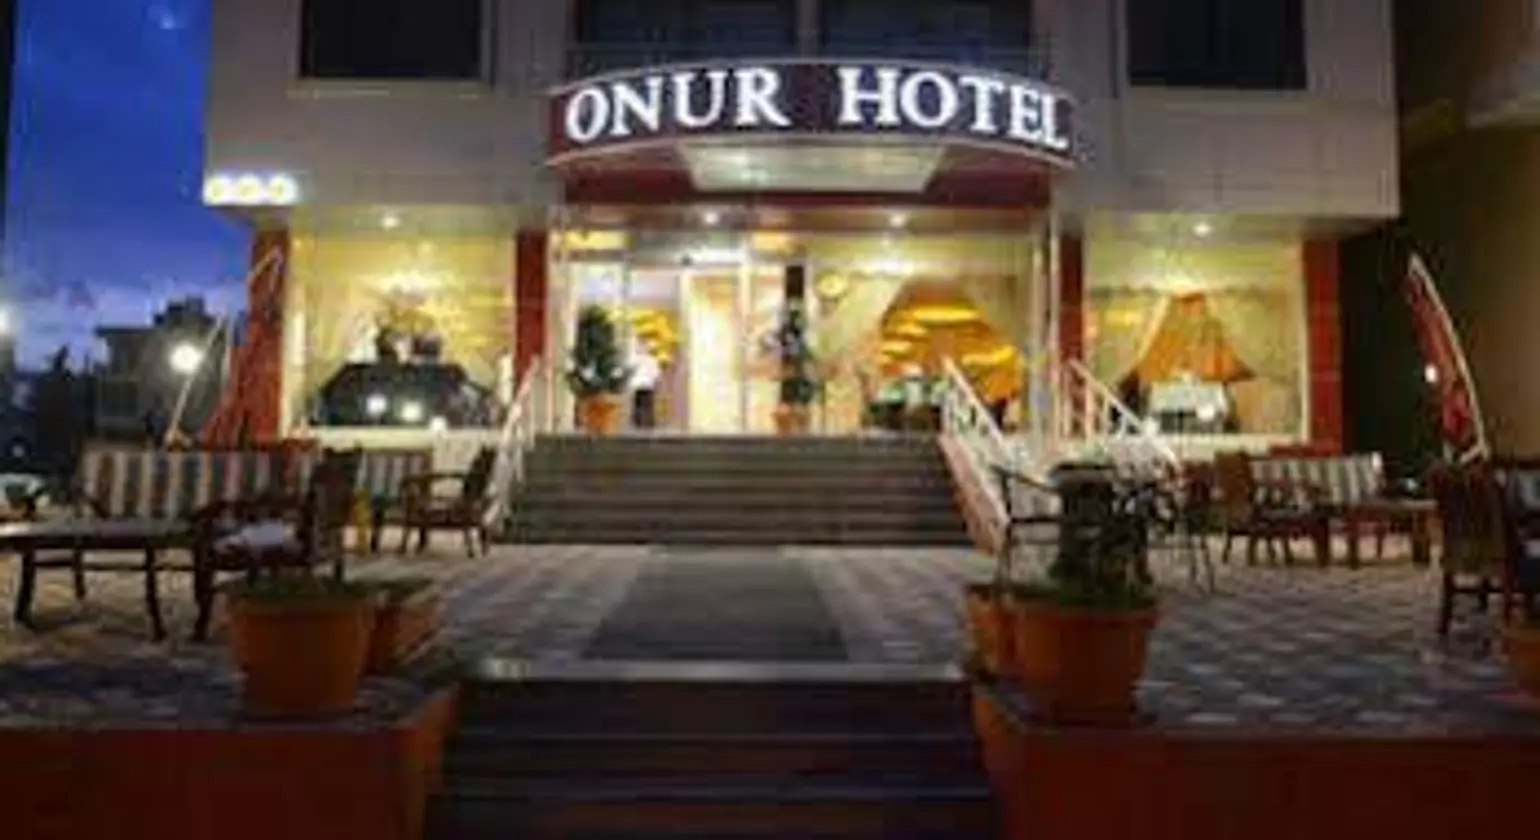 Grand Onur Hotel